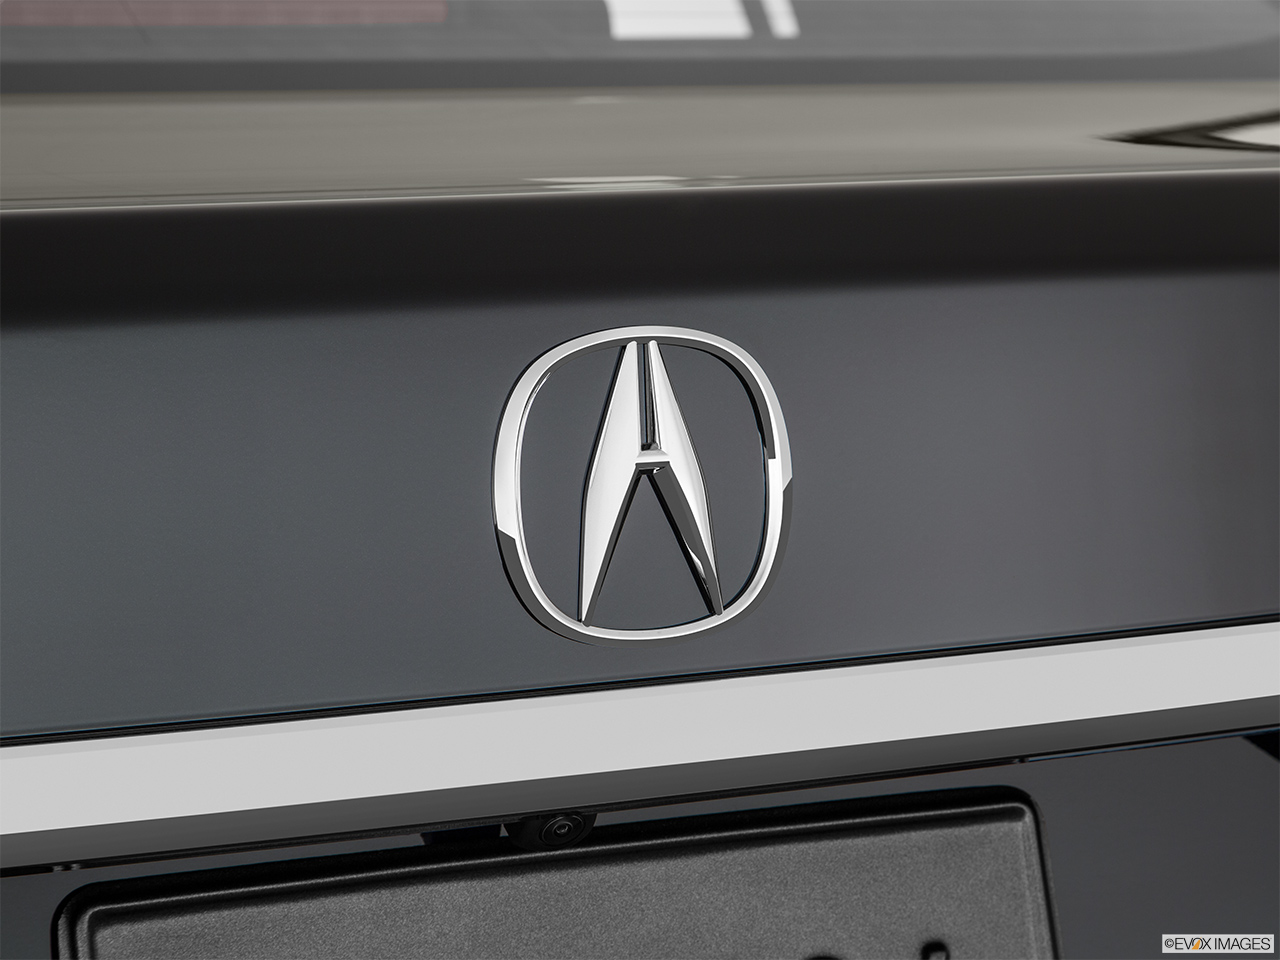 2018 Acura RLX Base Rear manufacture badge/emblem 